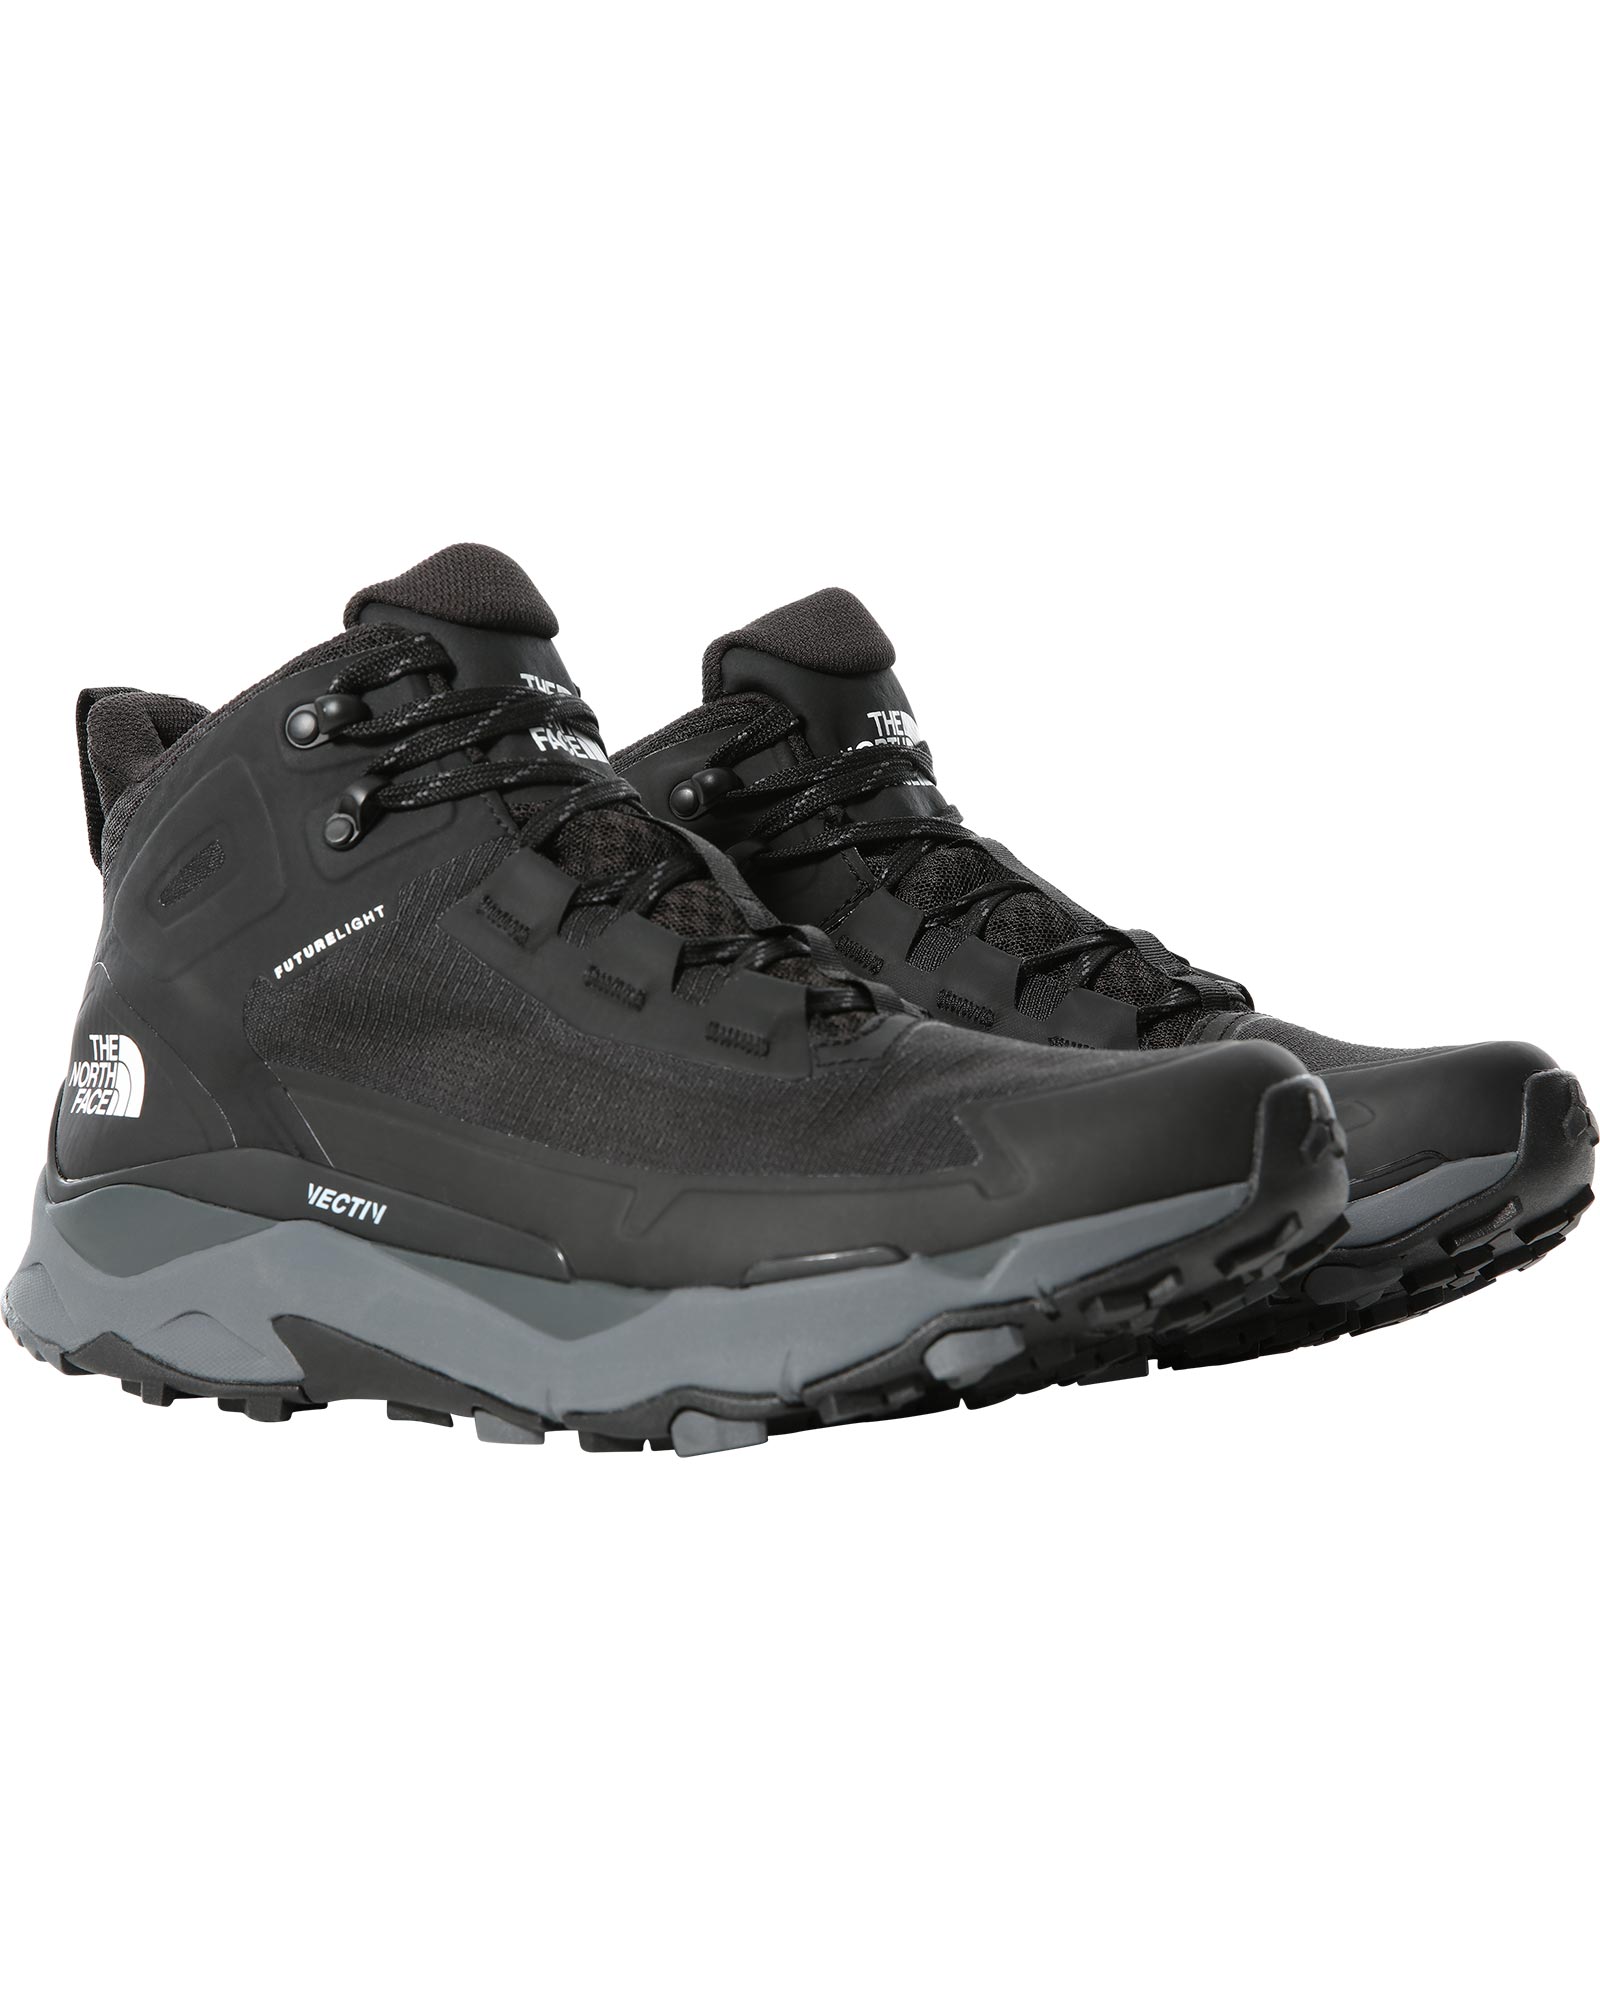 The North Face Vectiv Exploris FUTURELIGHT Mid Men’s Boots - TNF Black/Zinc Grey UK 7.5